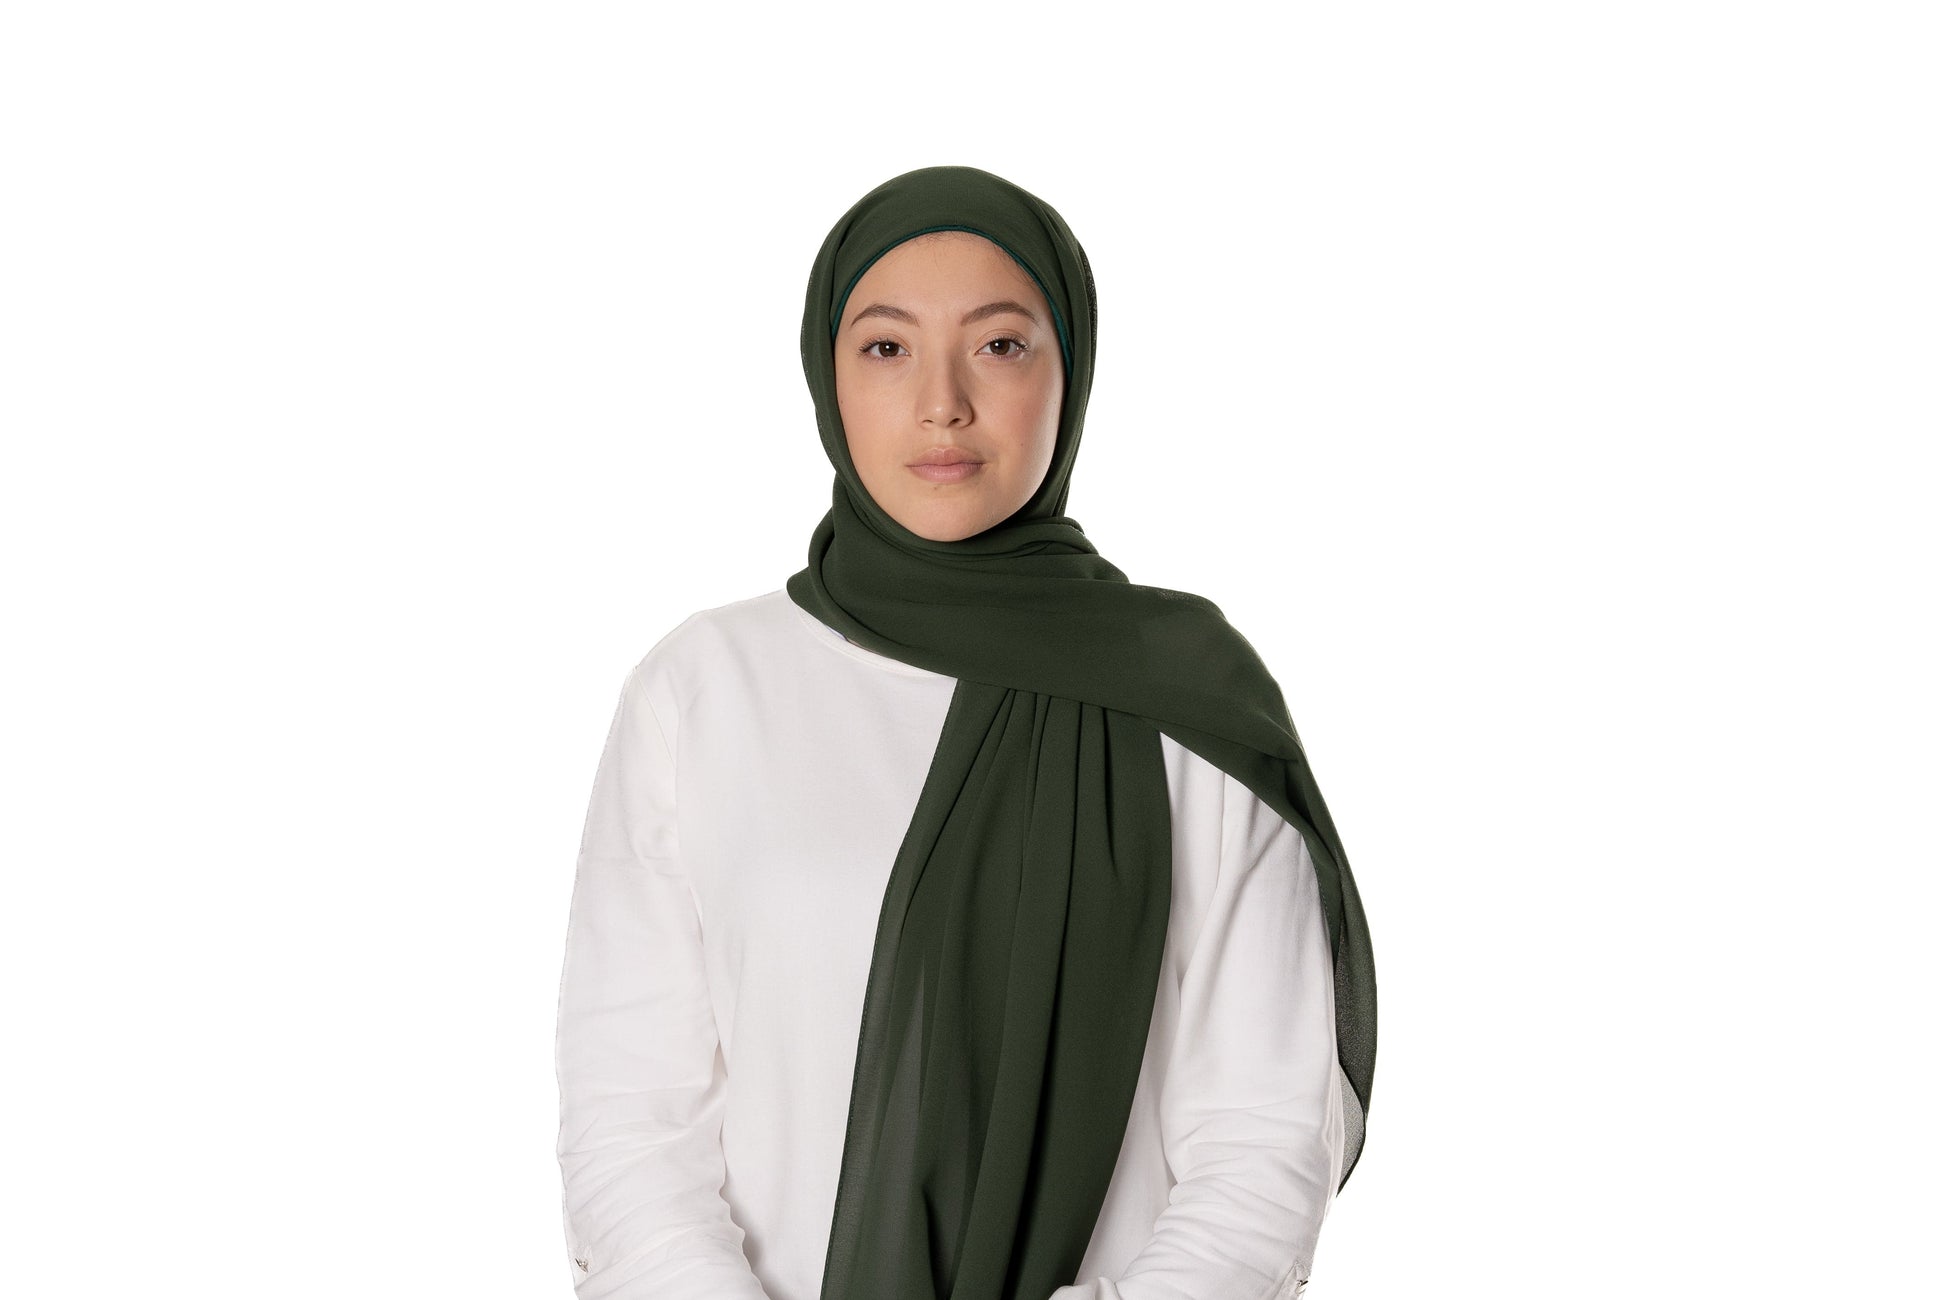 jolienisa Jolie Nisa Premium Chiffon Hijab with Non-Slip Jersey Cap - Elegant, Comfortable, and Secure Hijab for Women